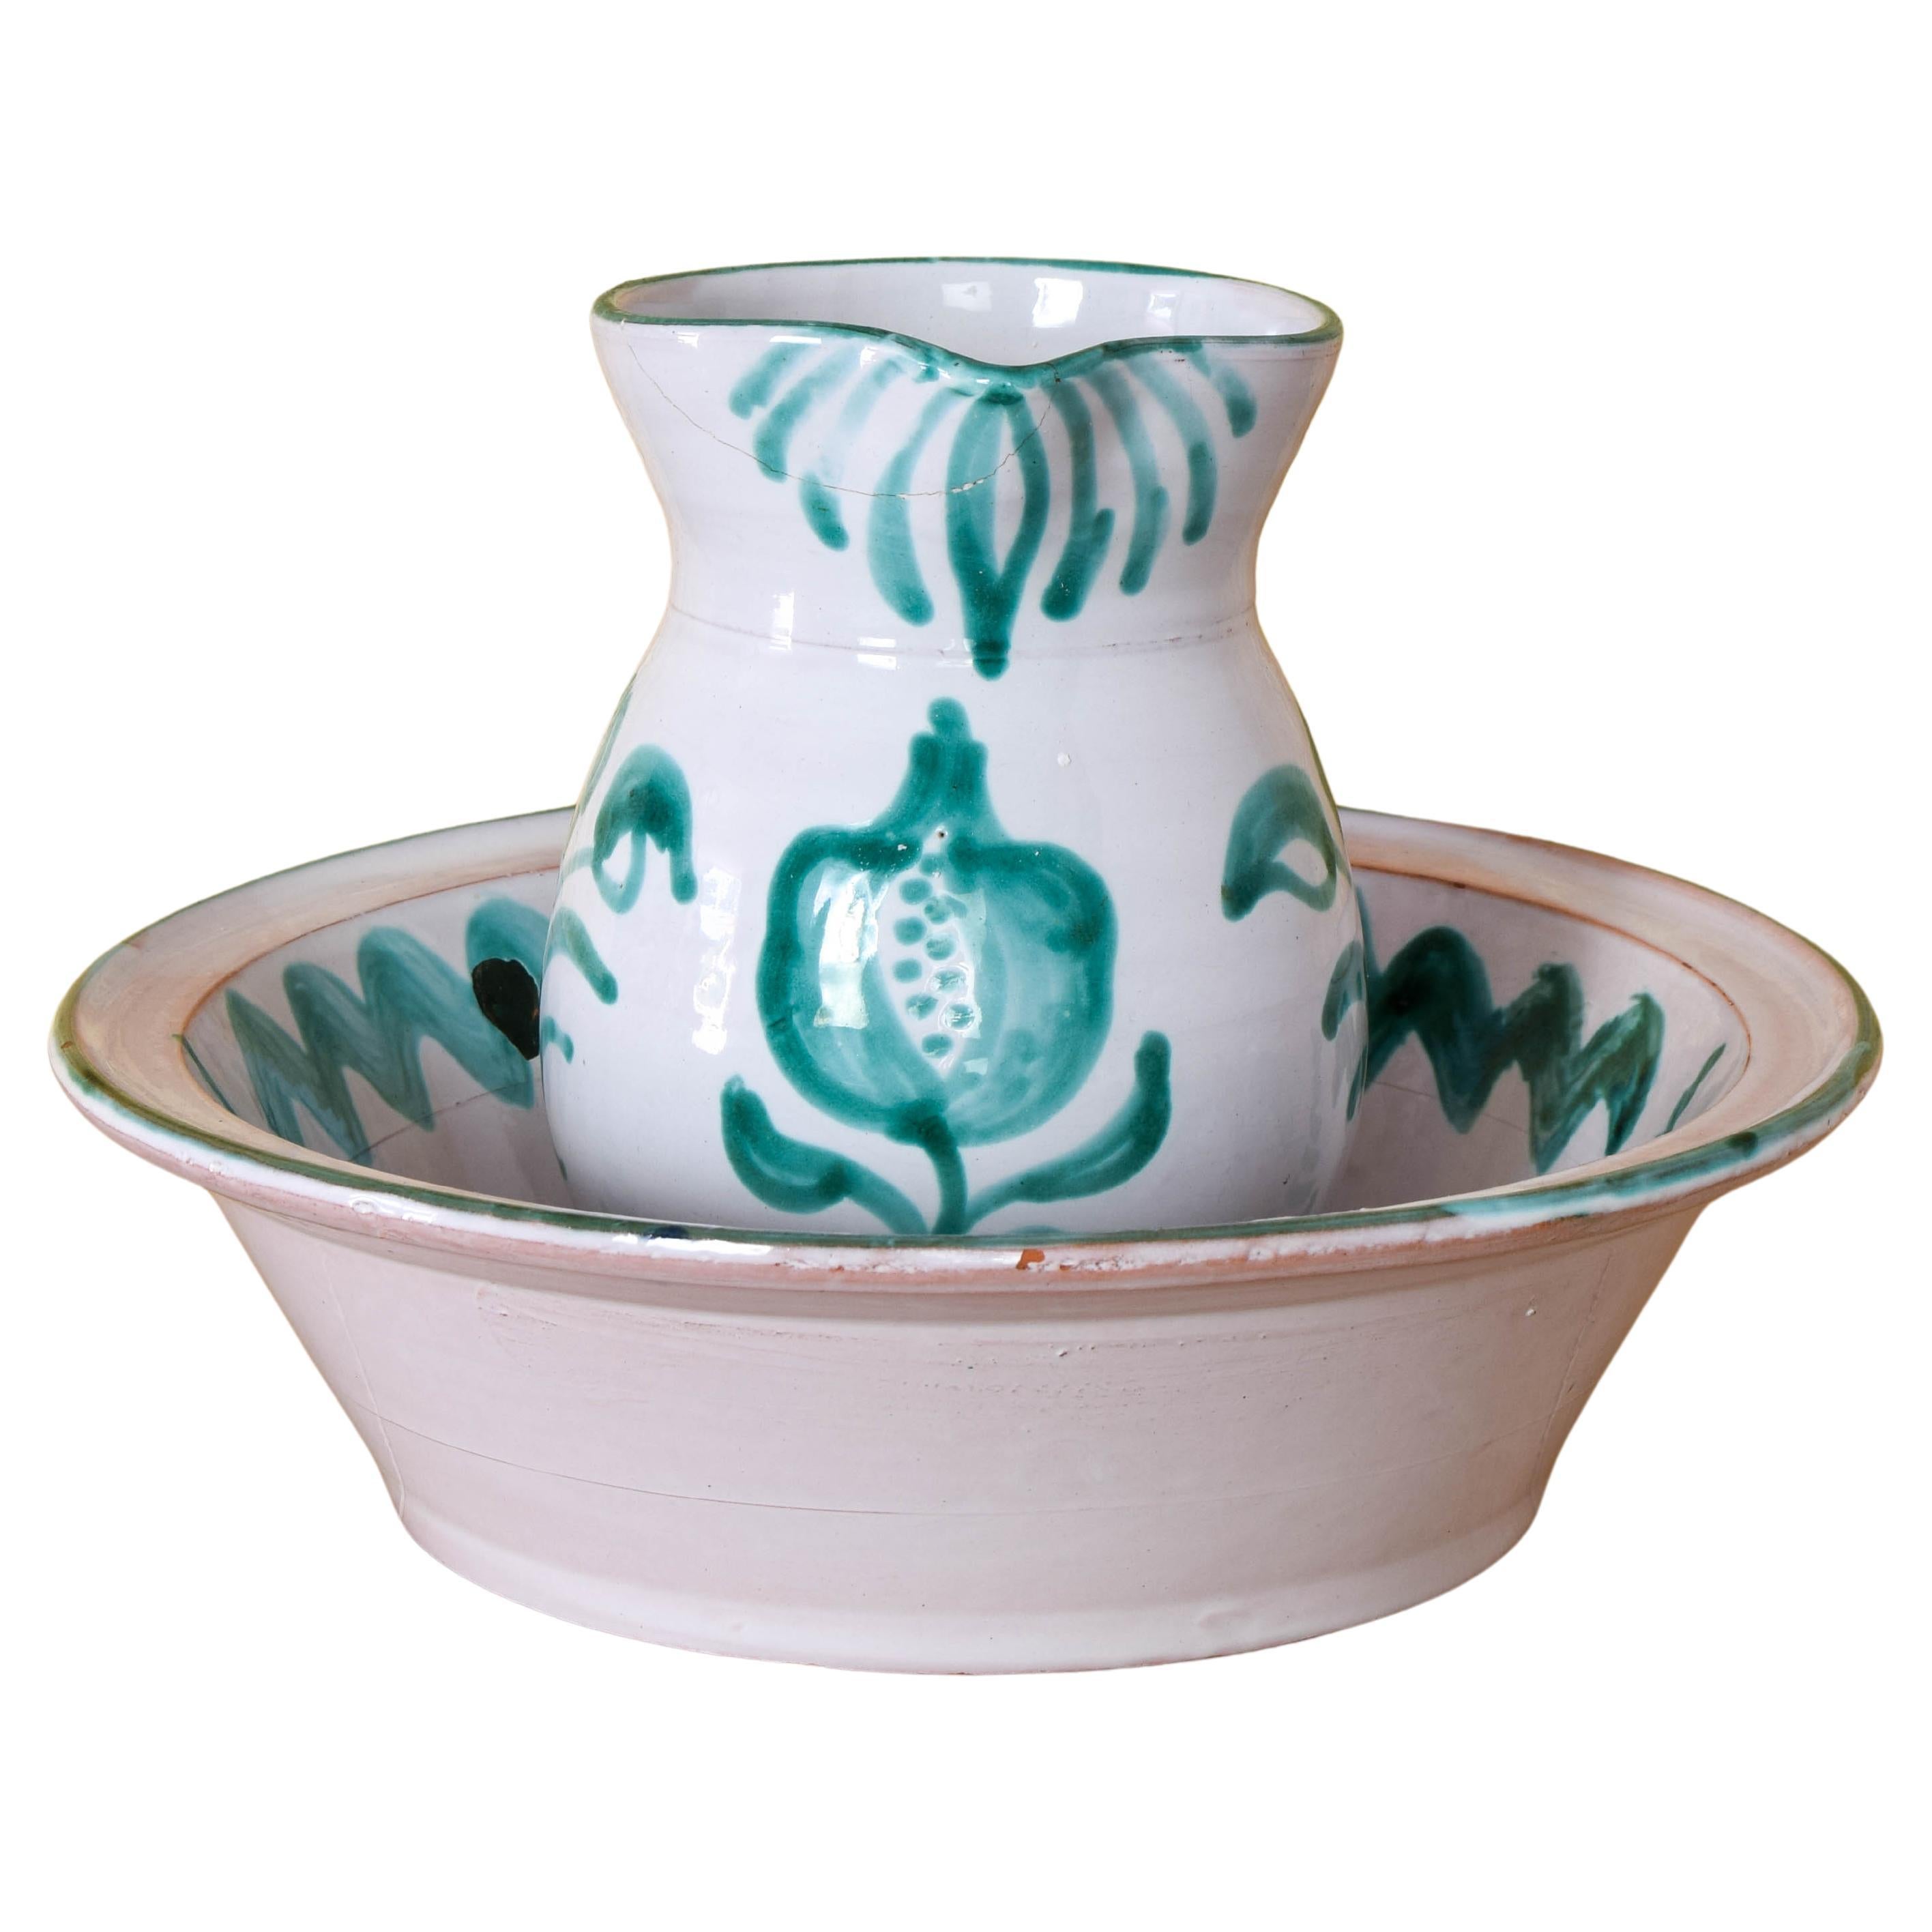 Fajalauza ceramic jug and Lebrillo bowl Spain 60s For Sale